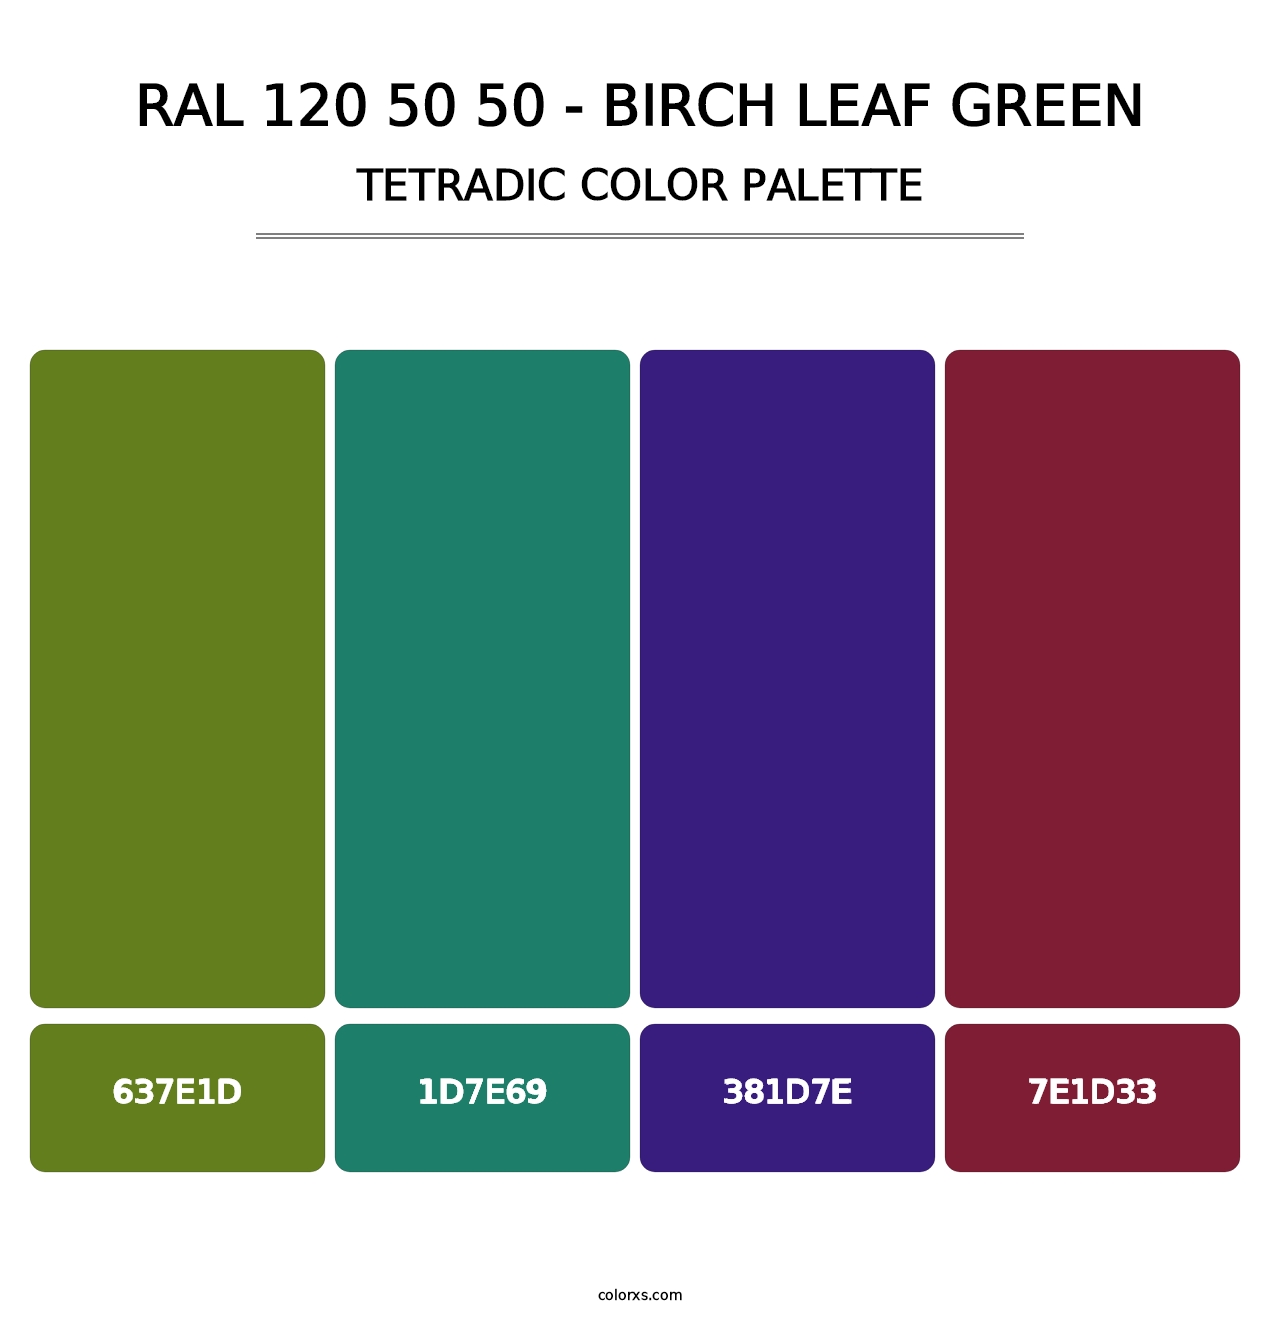 RAL 120 50 50 - Birch Leaf Green - Tetradic Color Palette